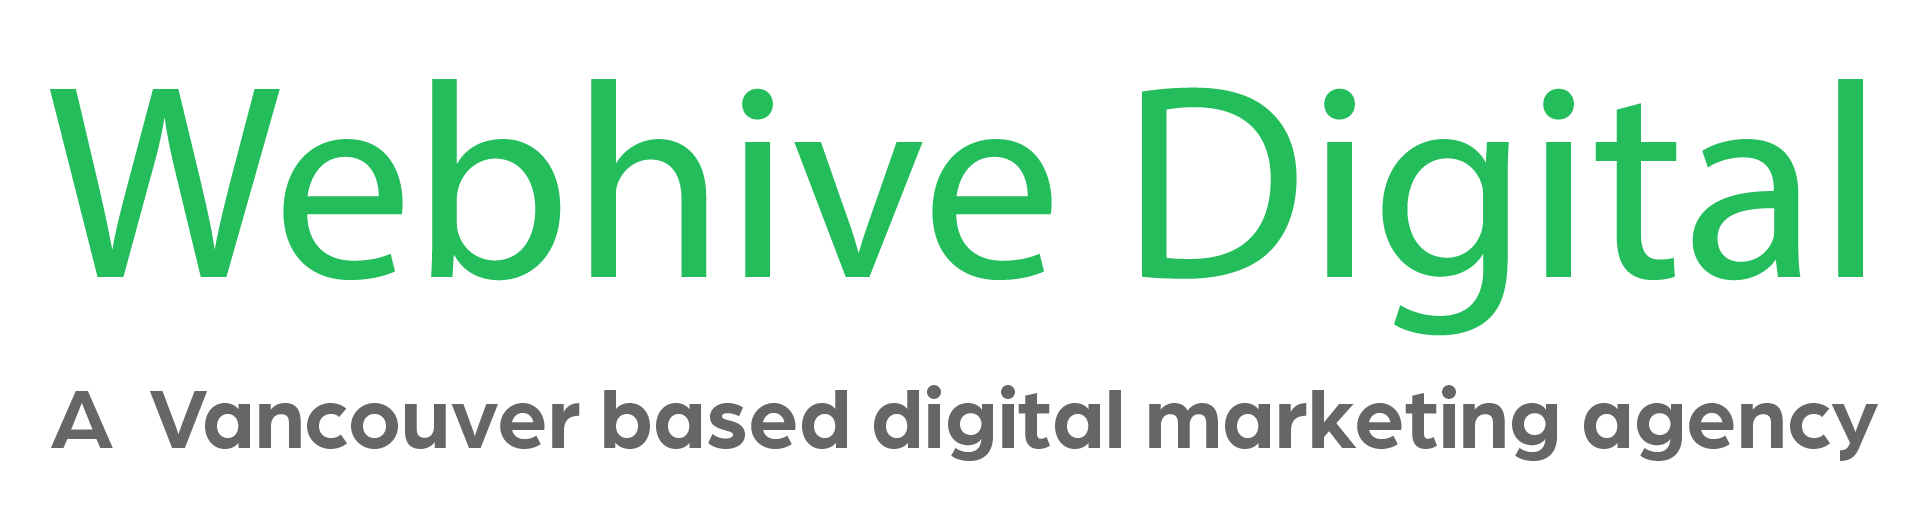 Webhive Digital - Digital Marketing Agency in Vancouver, BC